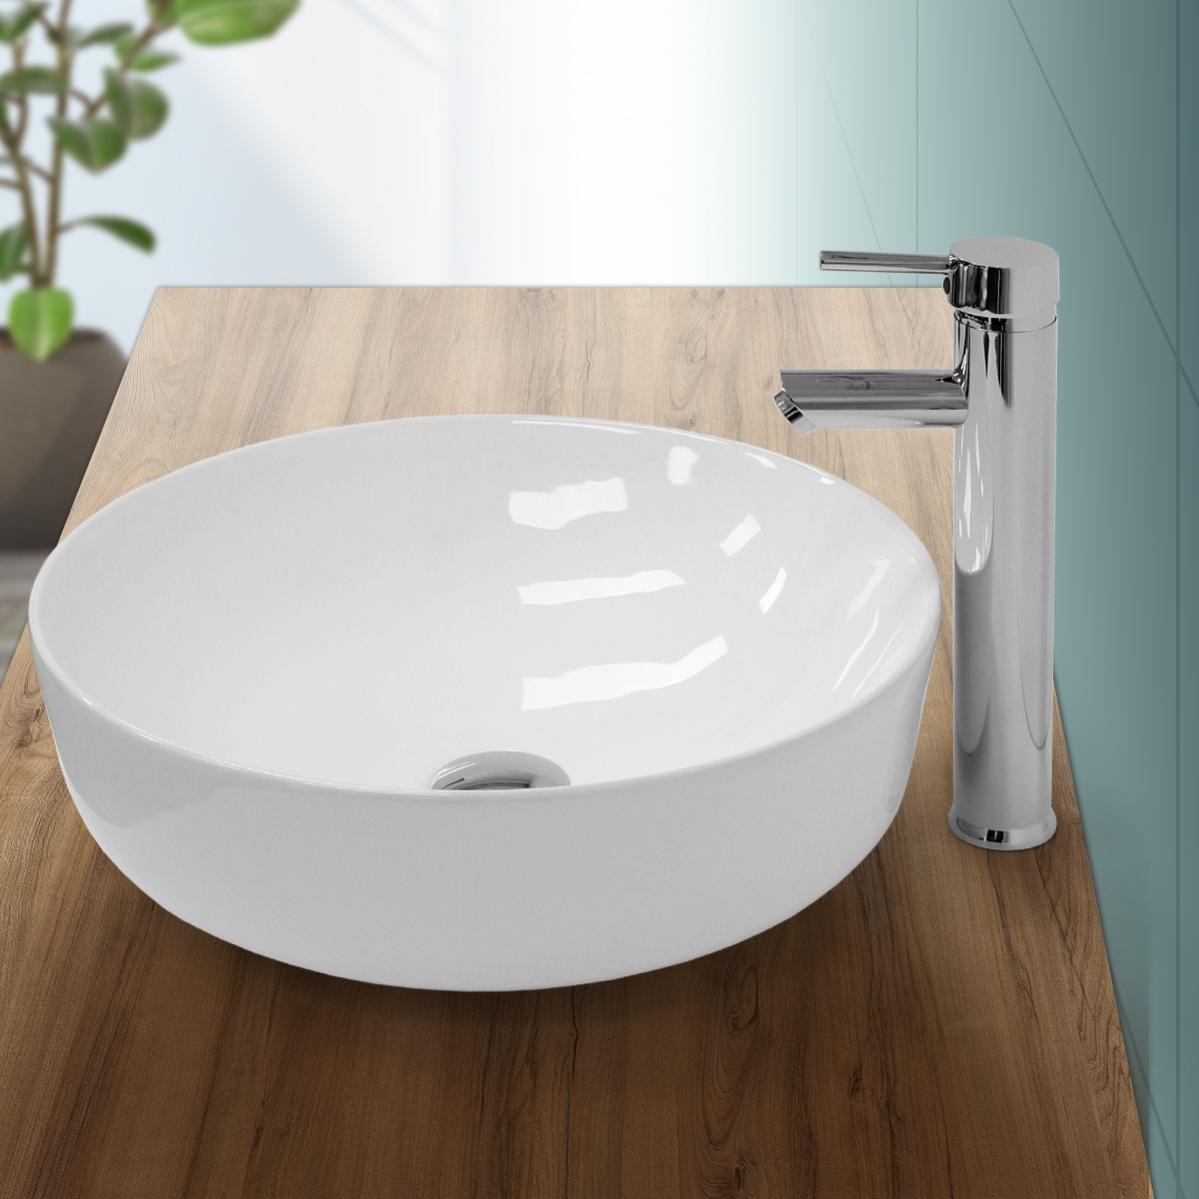 Lavabo en céramique blanc vasque èvier à poser design rond moderne Ø 400 mm 